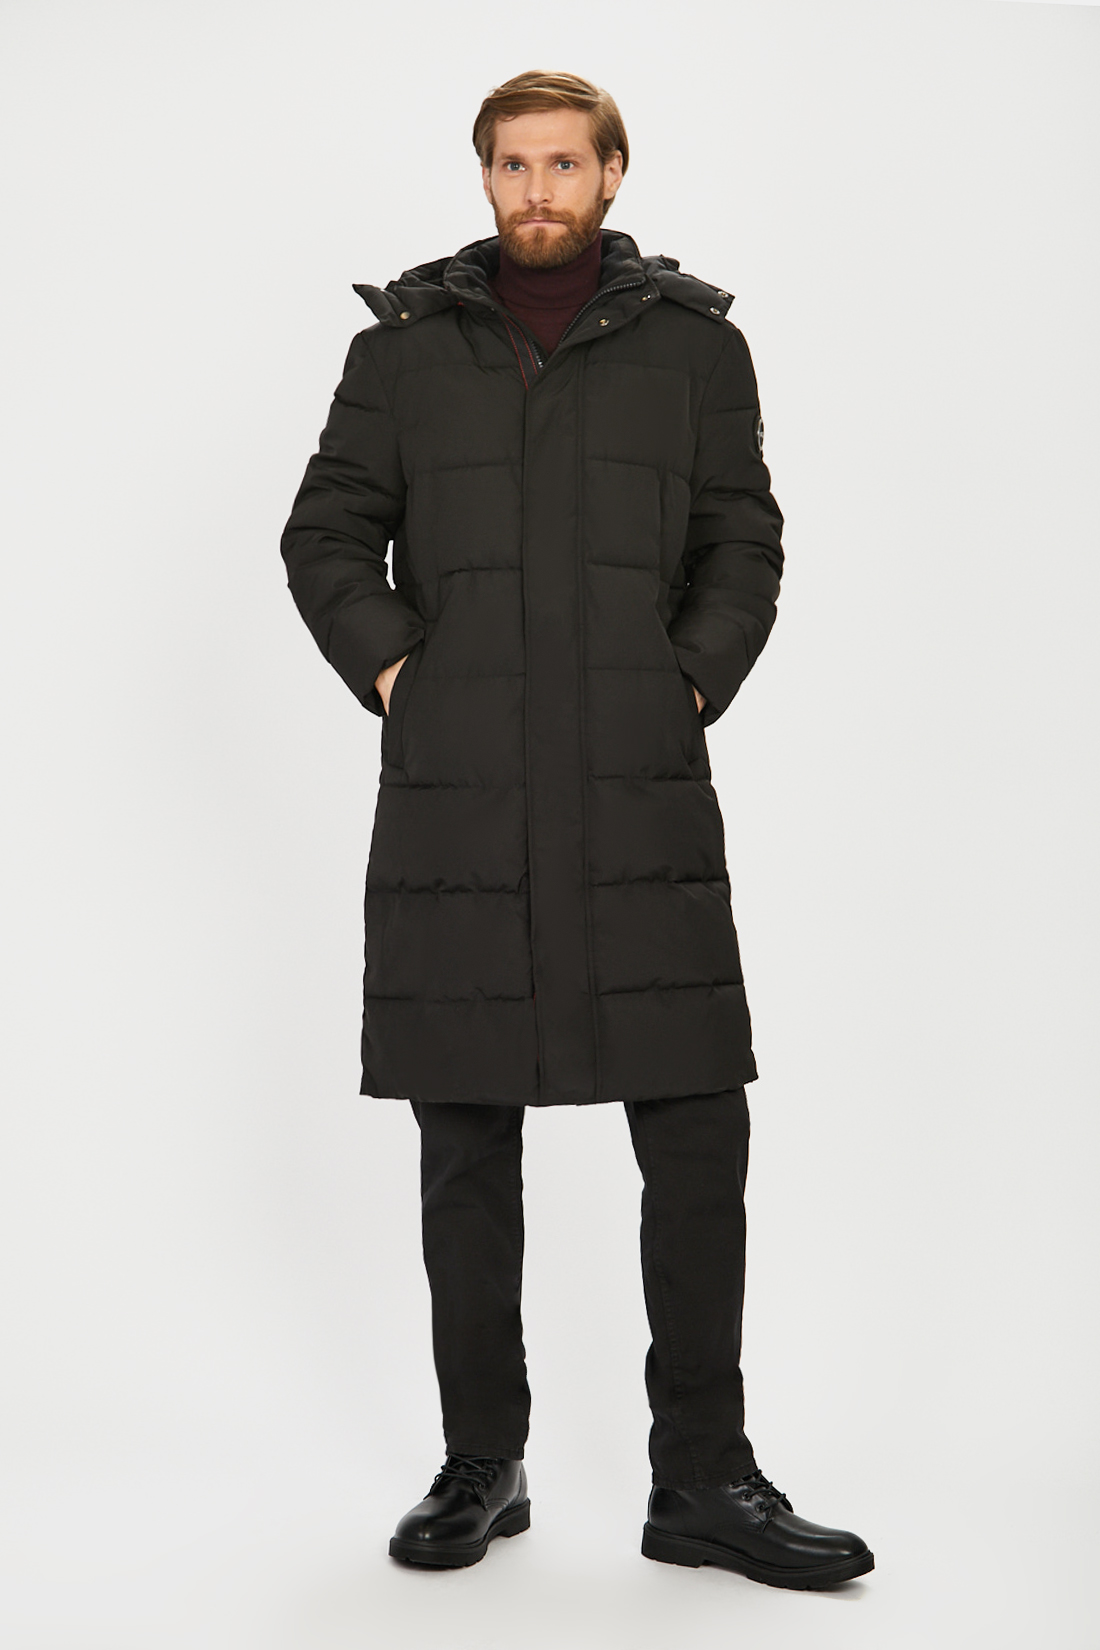 Куртка (Эко пух) (арт. baon B541506), размер M, цвет черный Куртка (Эко пух) (арт. baon B541506) - фото 1